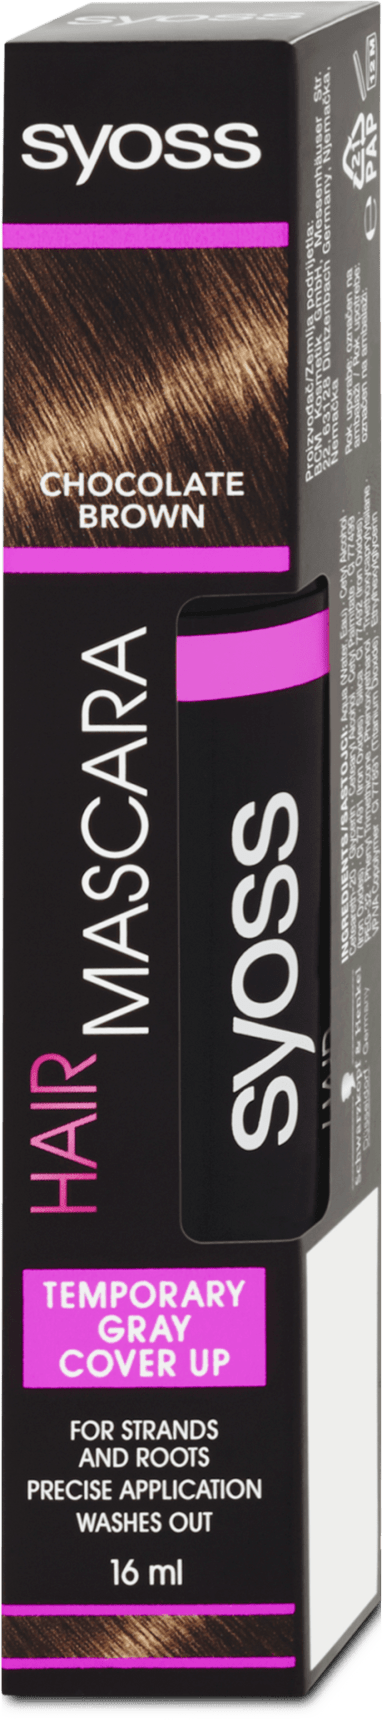 Syoss Chocolate Brown hair mascara, 16 ml